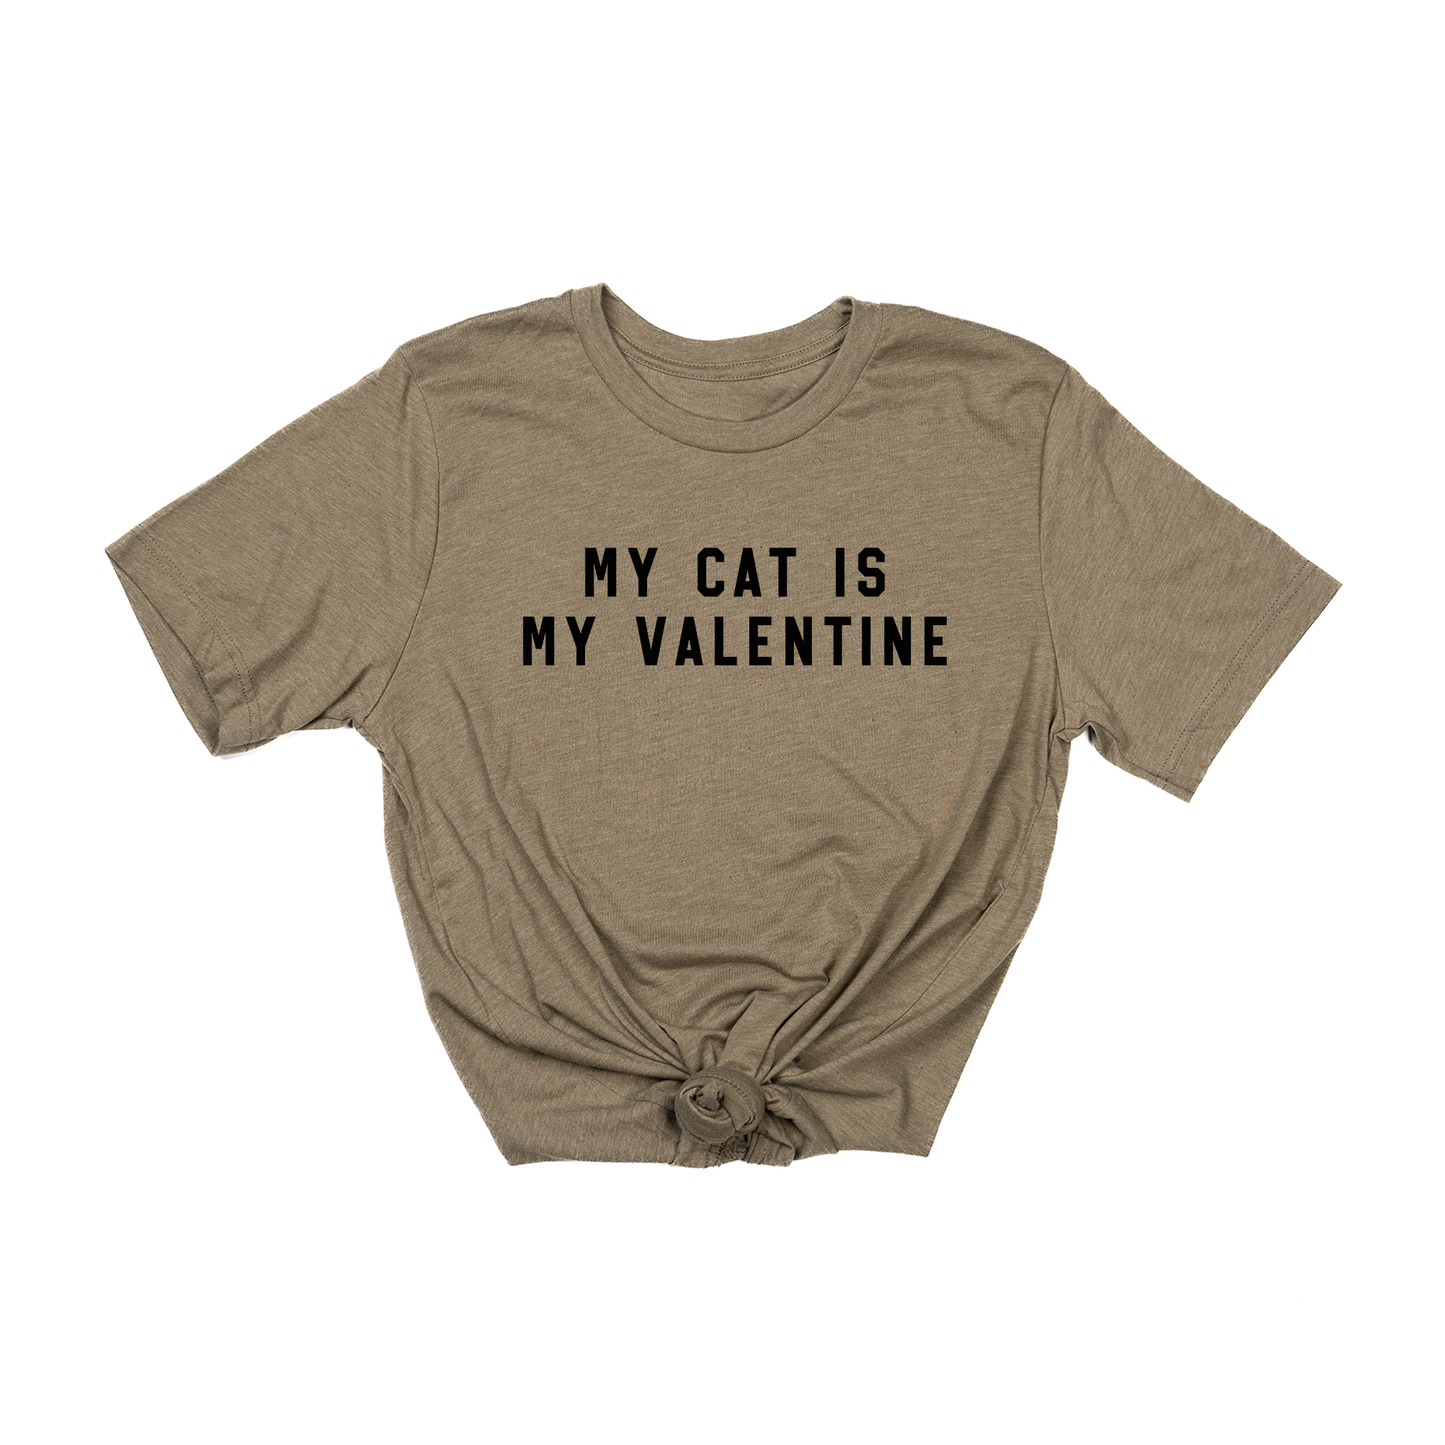 My Cat Is My Valentine (Black) - Tee (Olive)